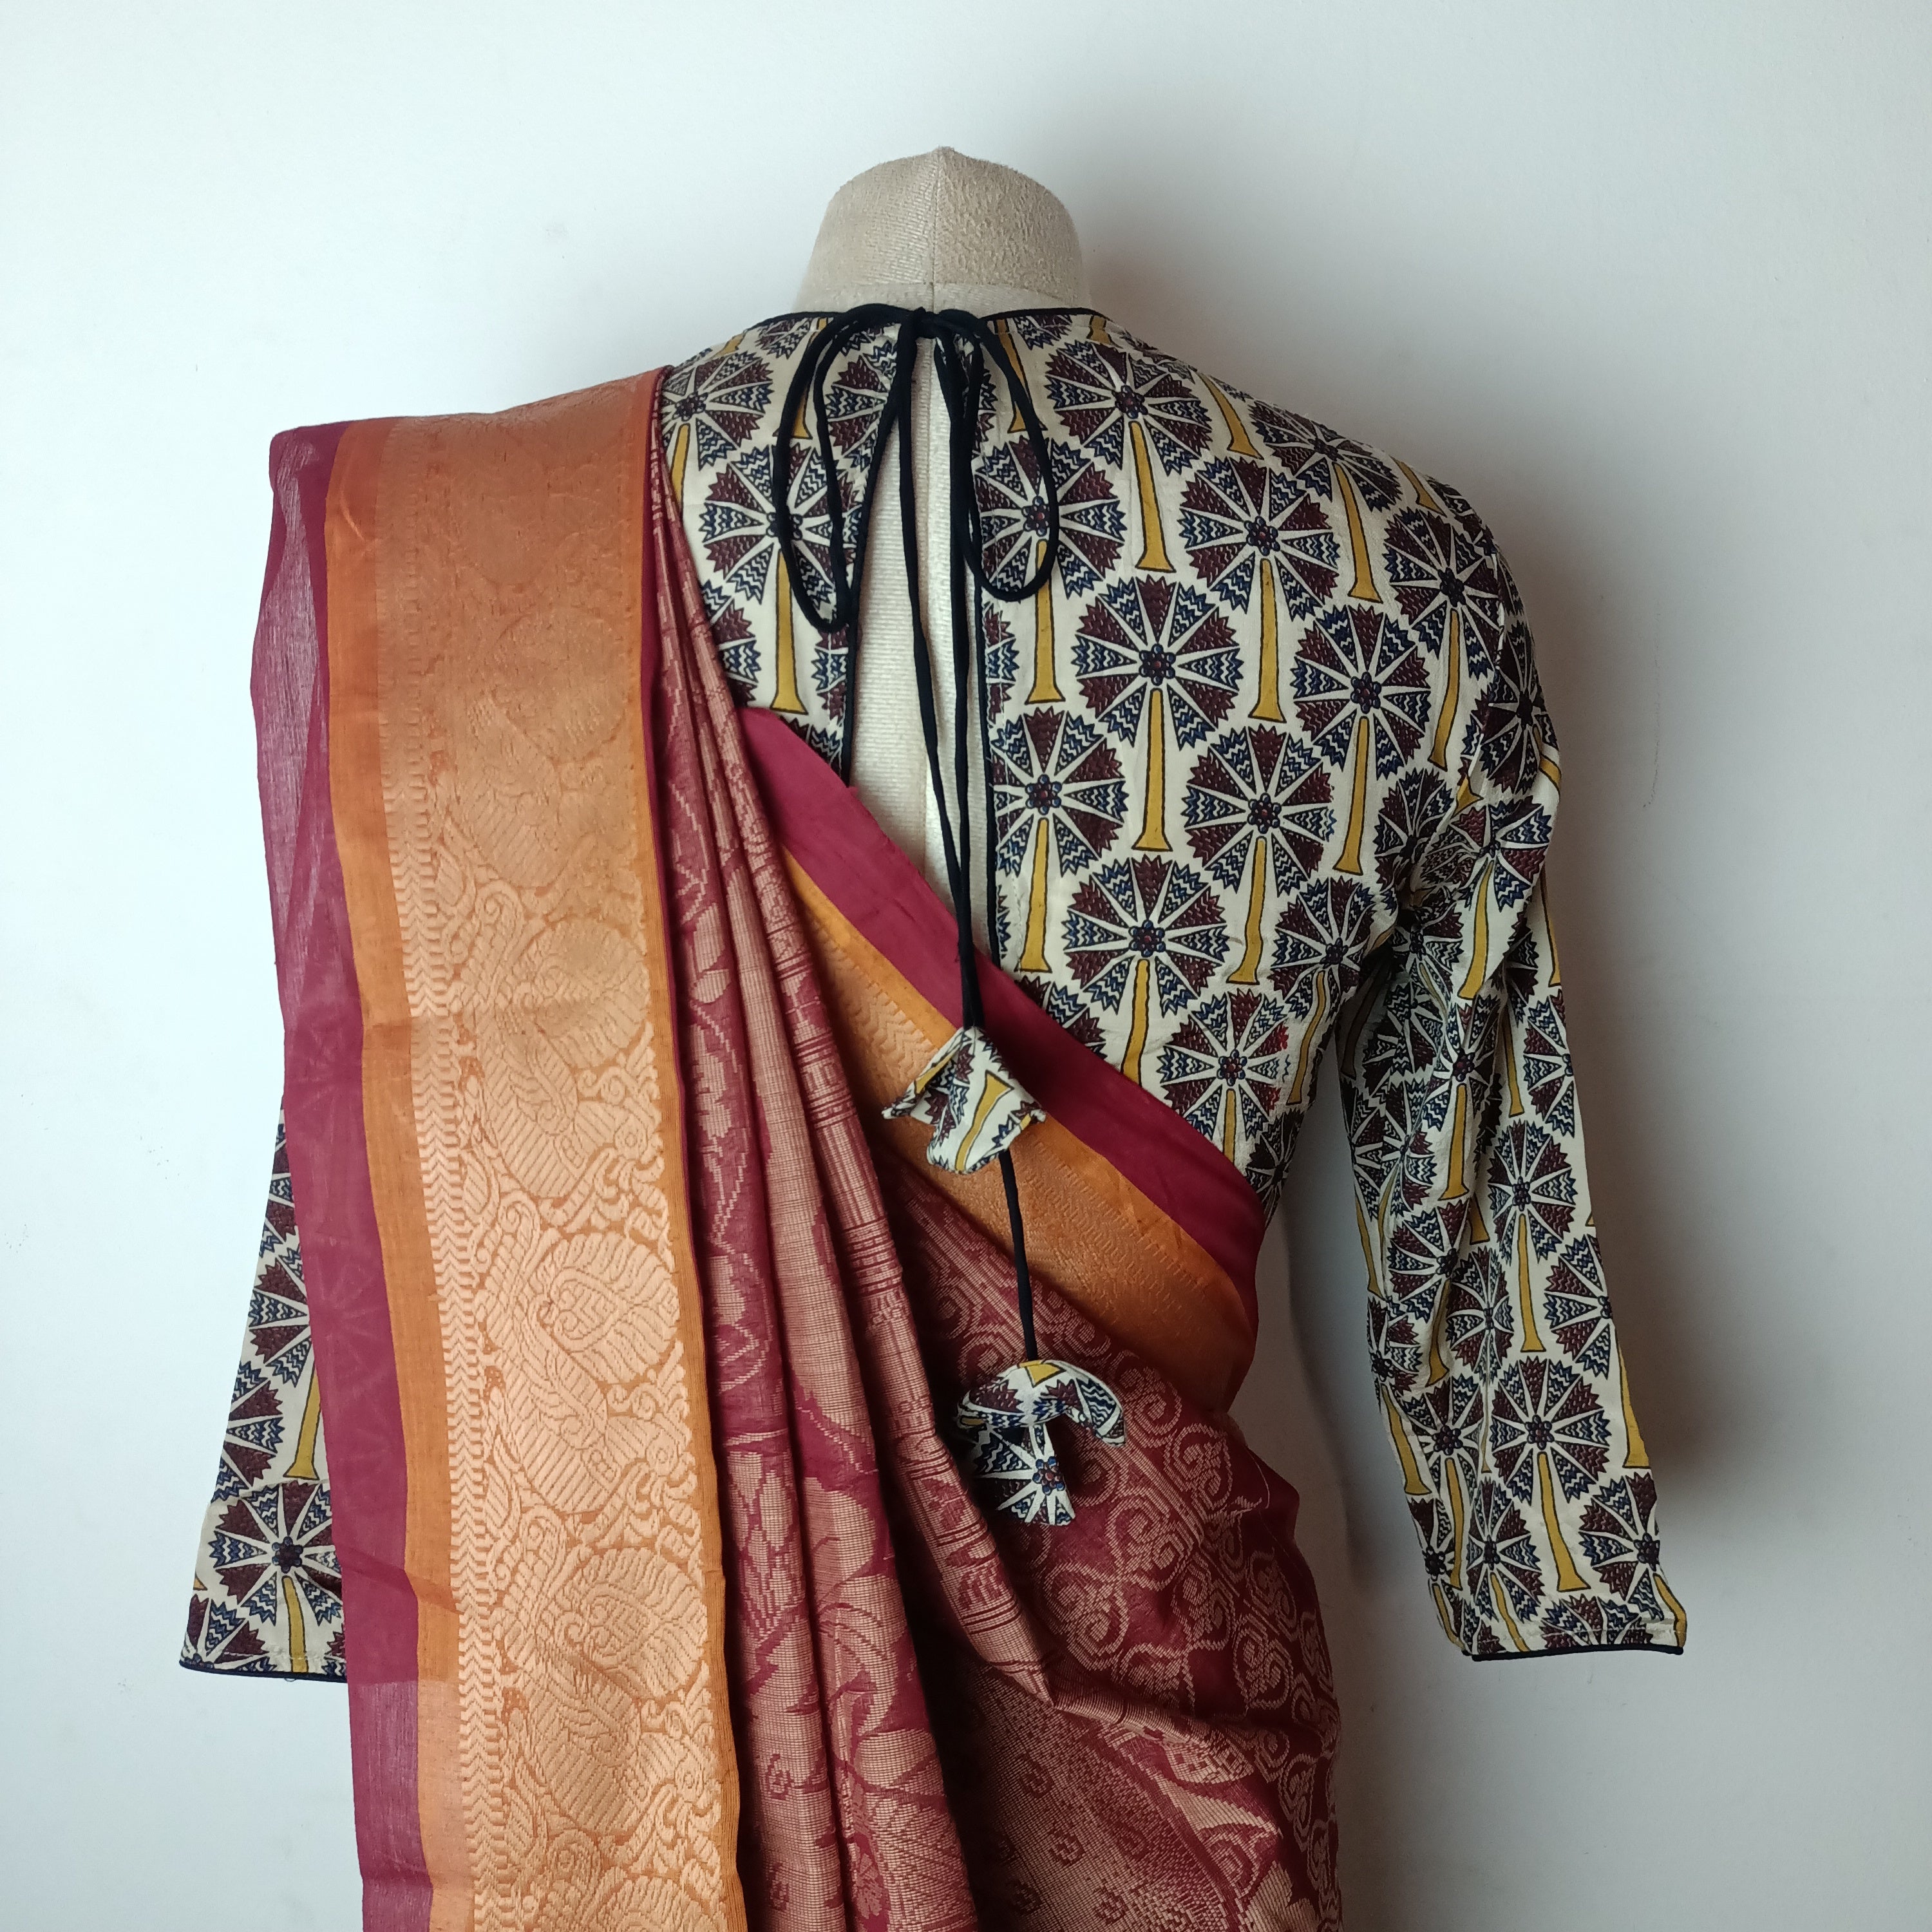 Black & maroon chettinad saree with matching chennuri silk blouse - Saree blouse combo